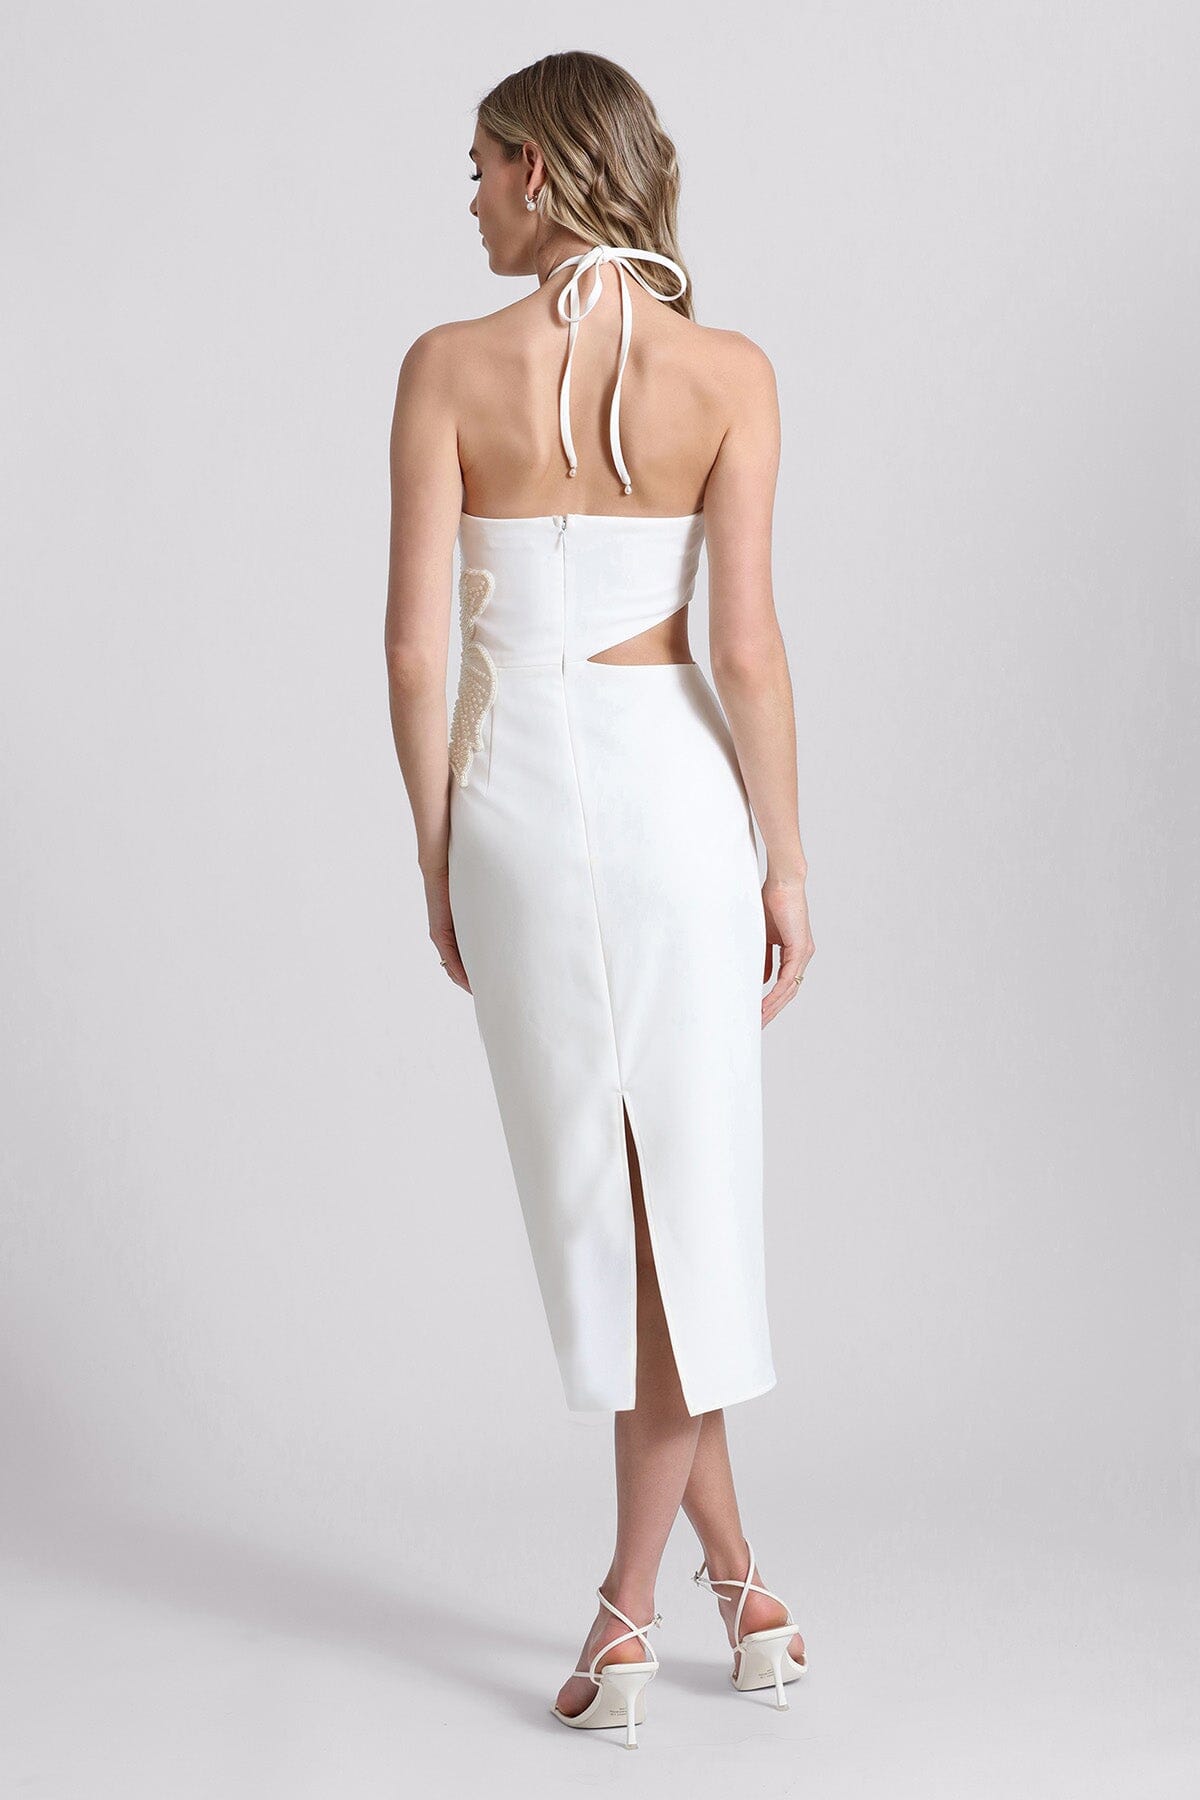 all white flower pearl embellished cut-out halter dress - designer white midi dresses by Avec Les Filles